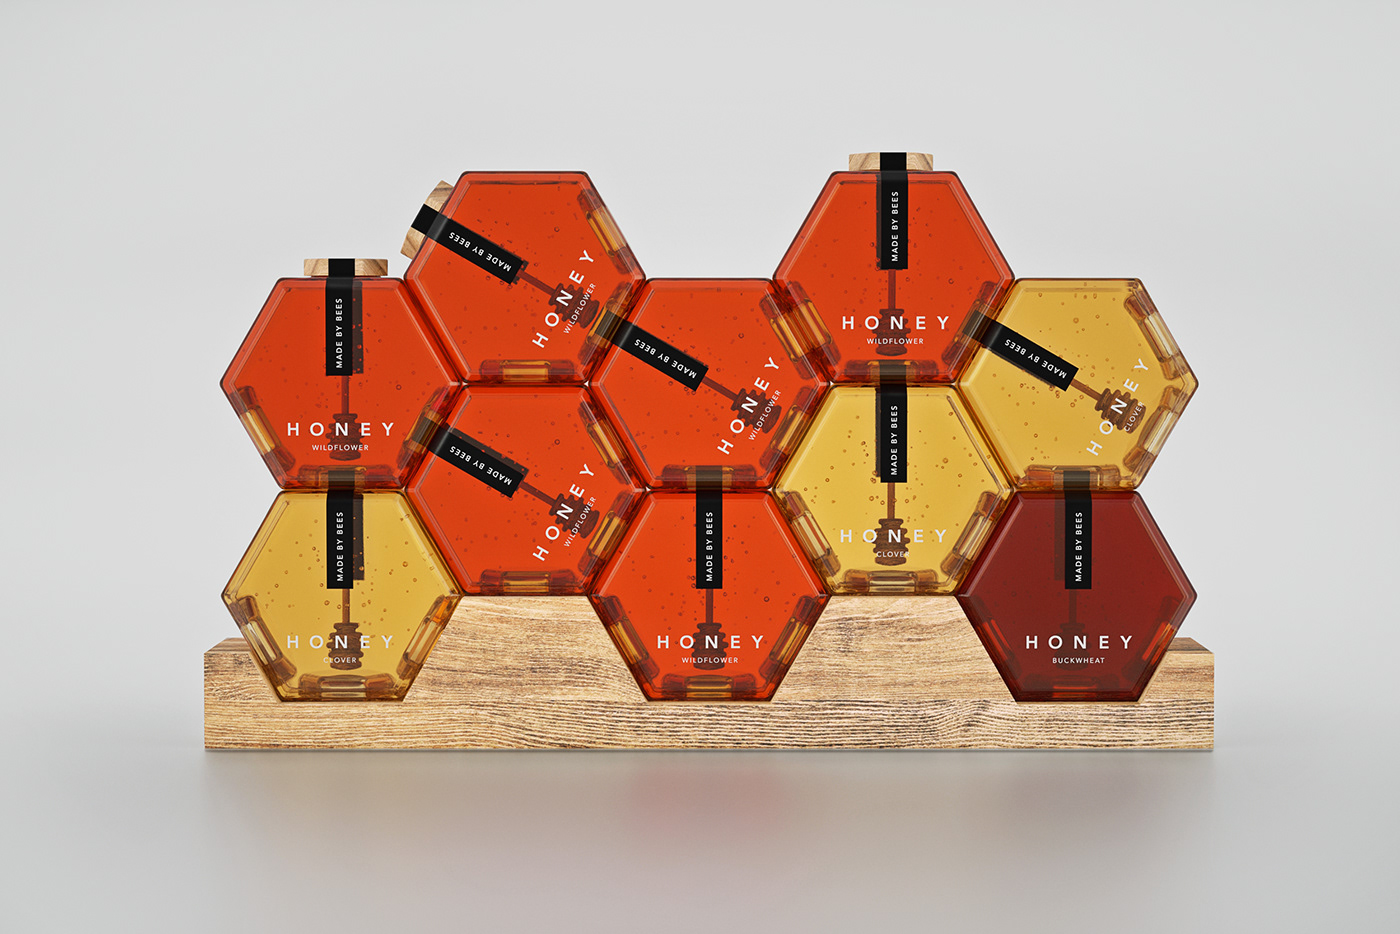 honey bee wood honeycomb hexagon clover box